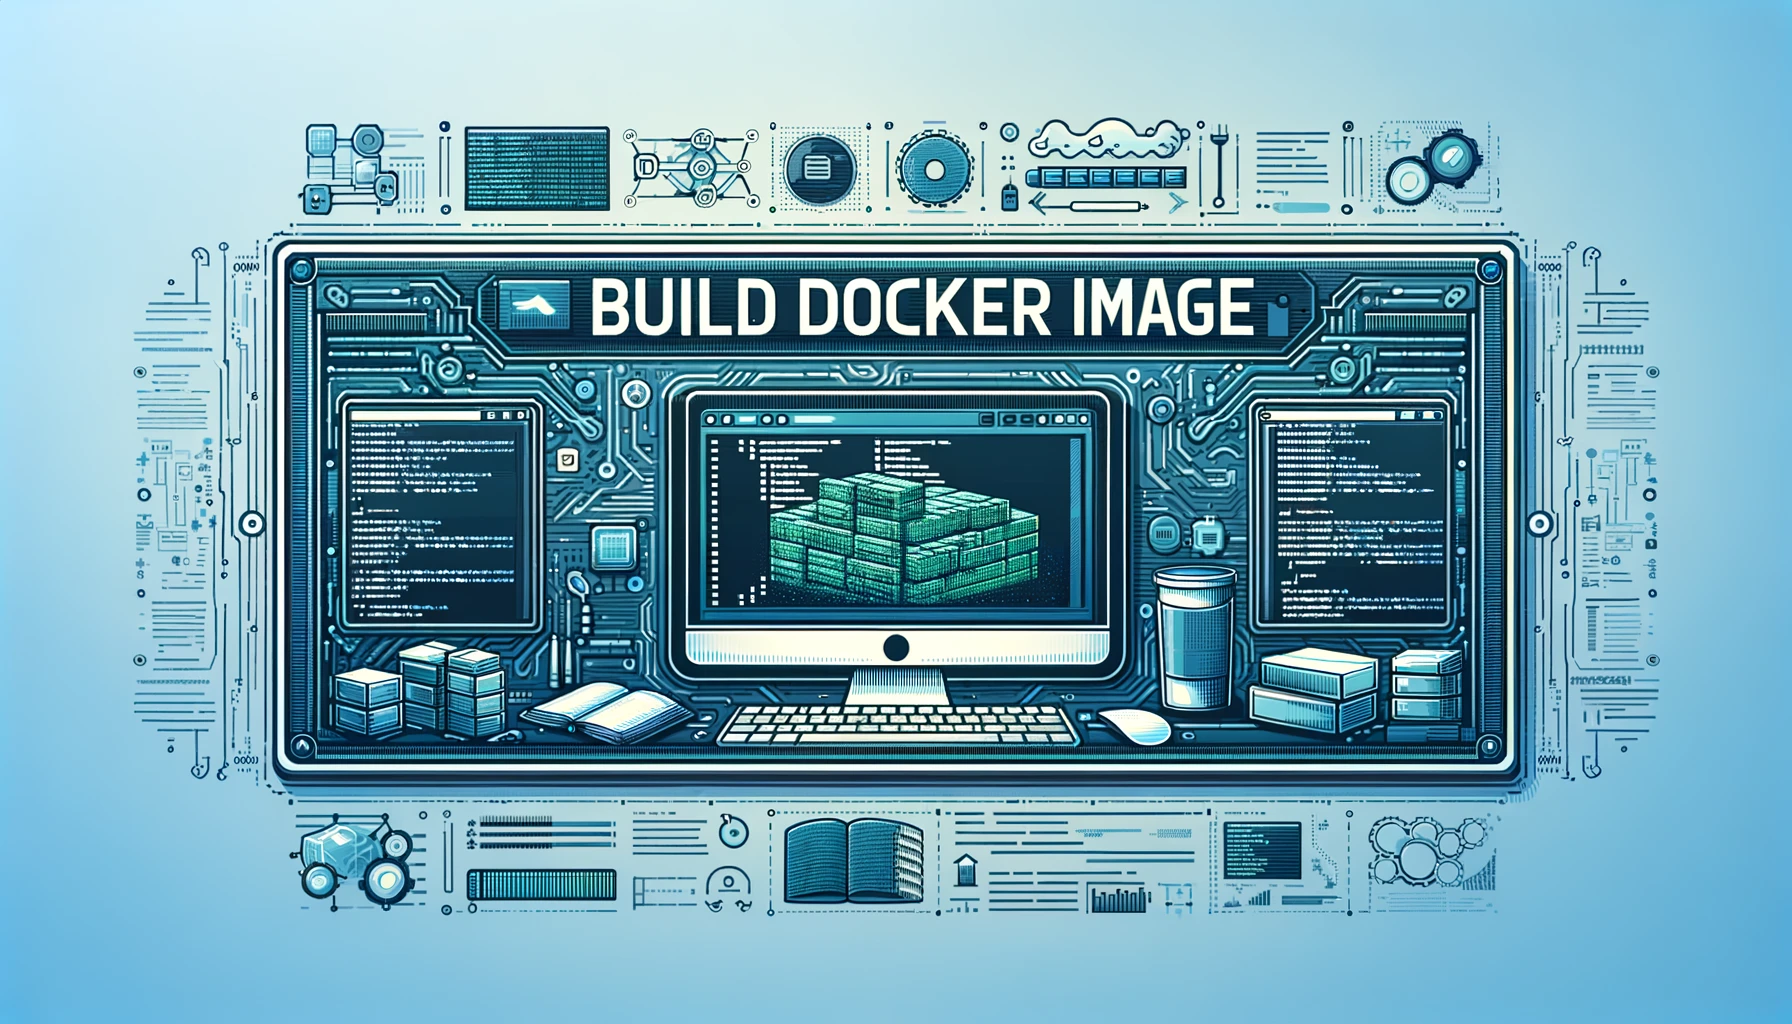 Lesson 3 - Building Docker Image